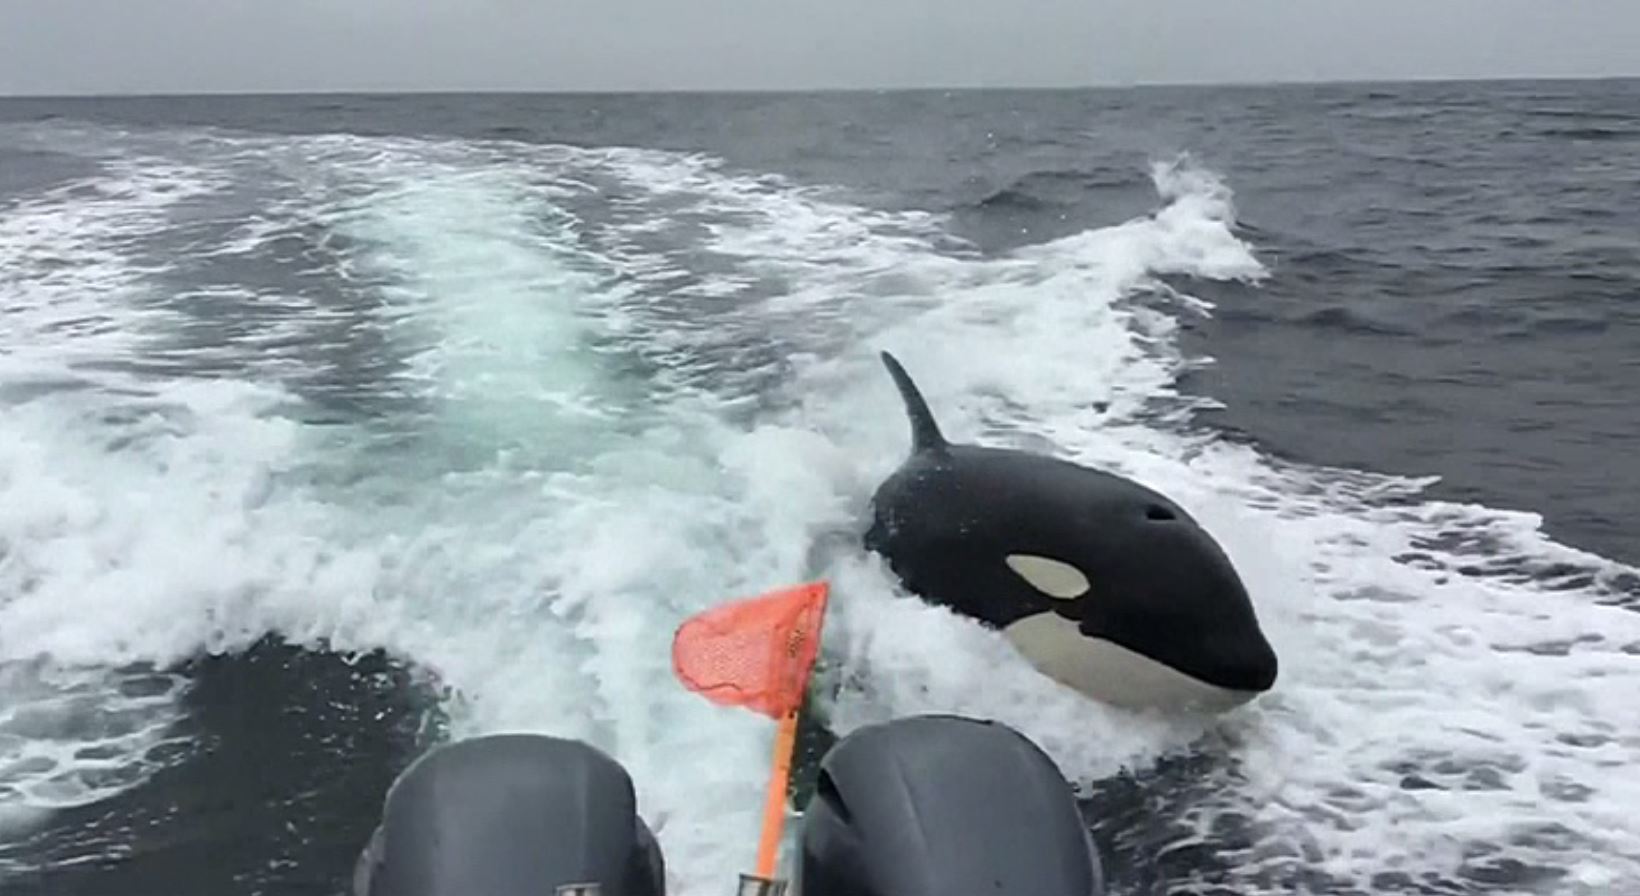 orca sailboat race